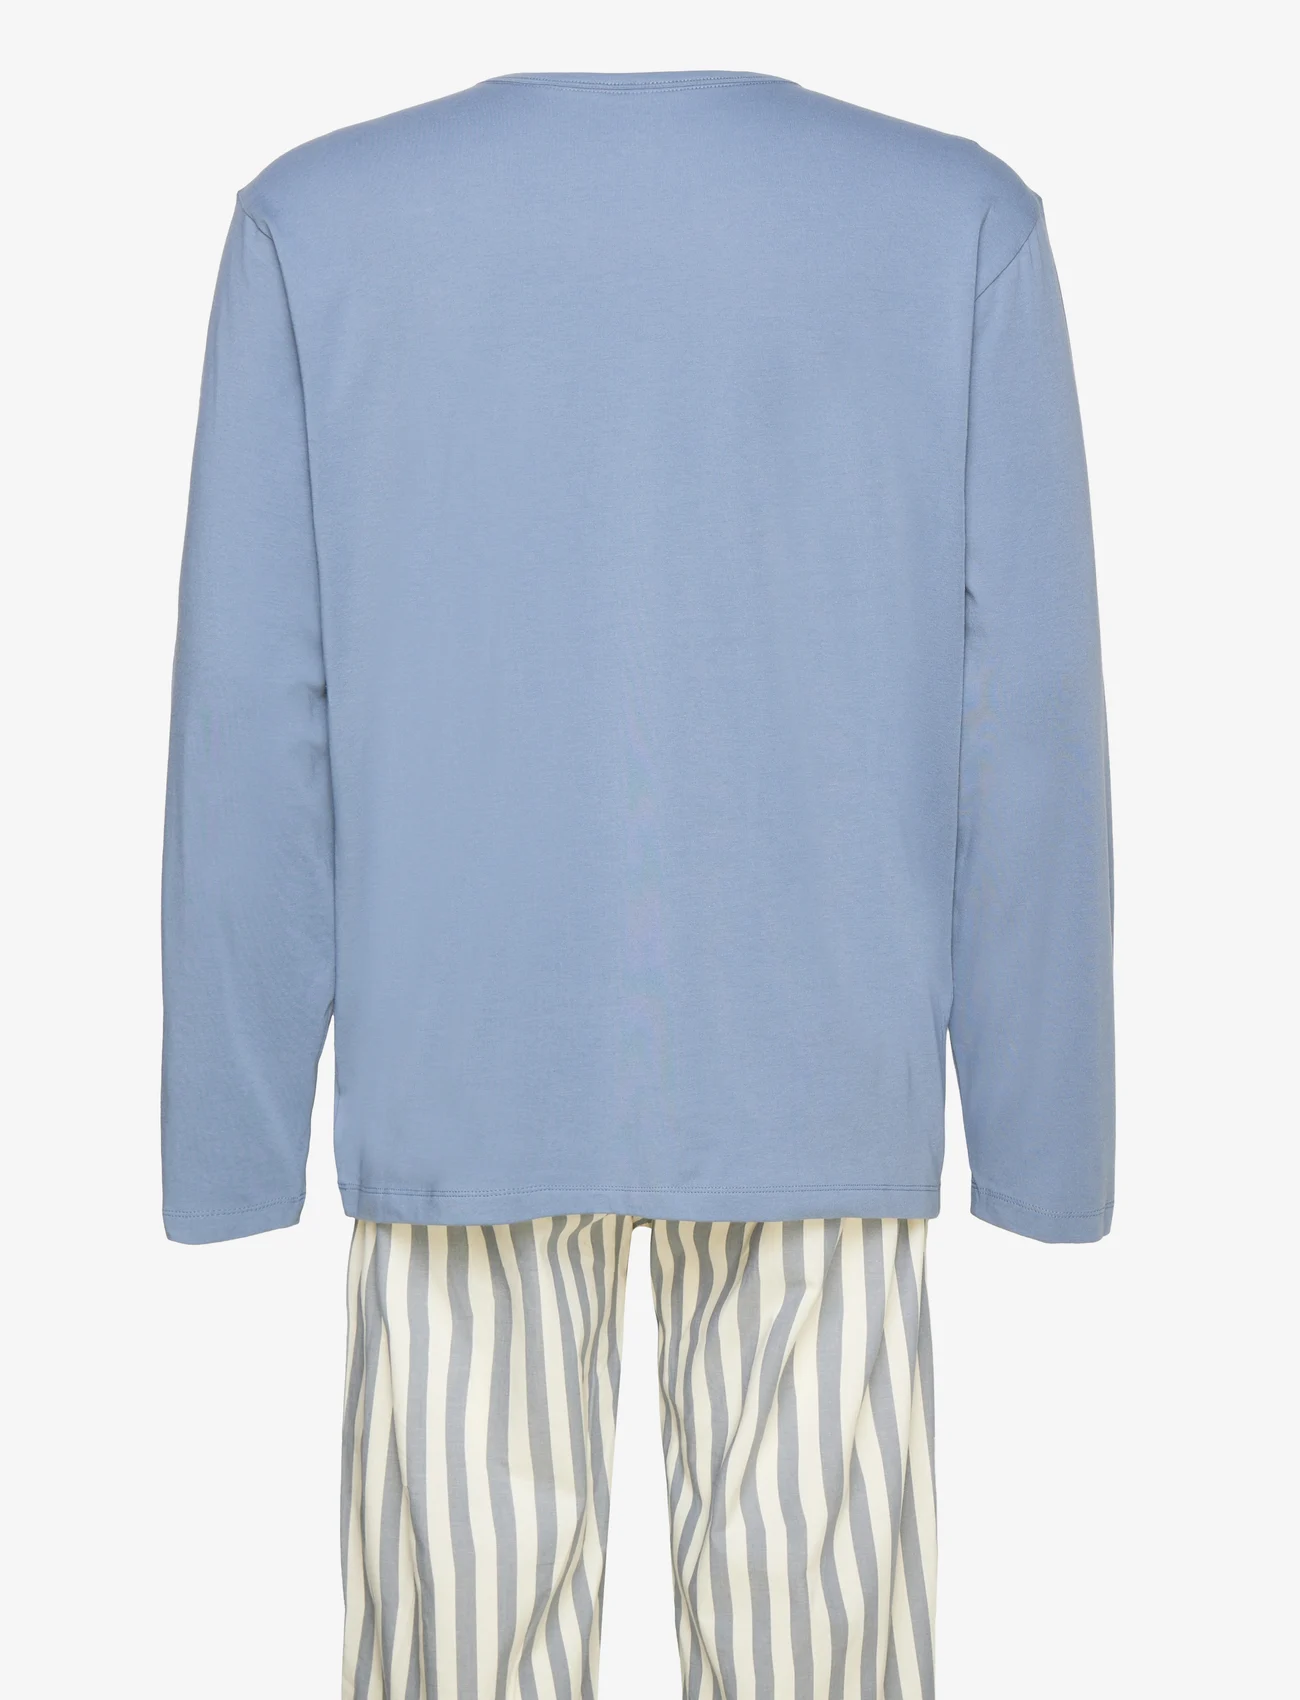 Calvin Klein - L/S PANT SET - pyjamas - flt stn tp, chbry strpe_flt stn btm - 1